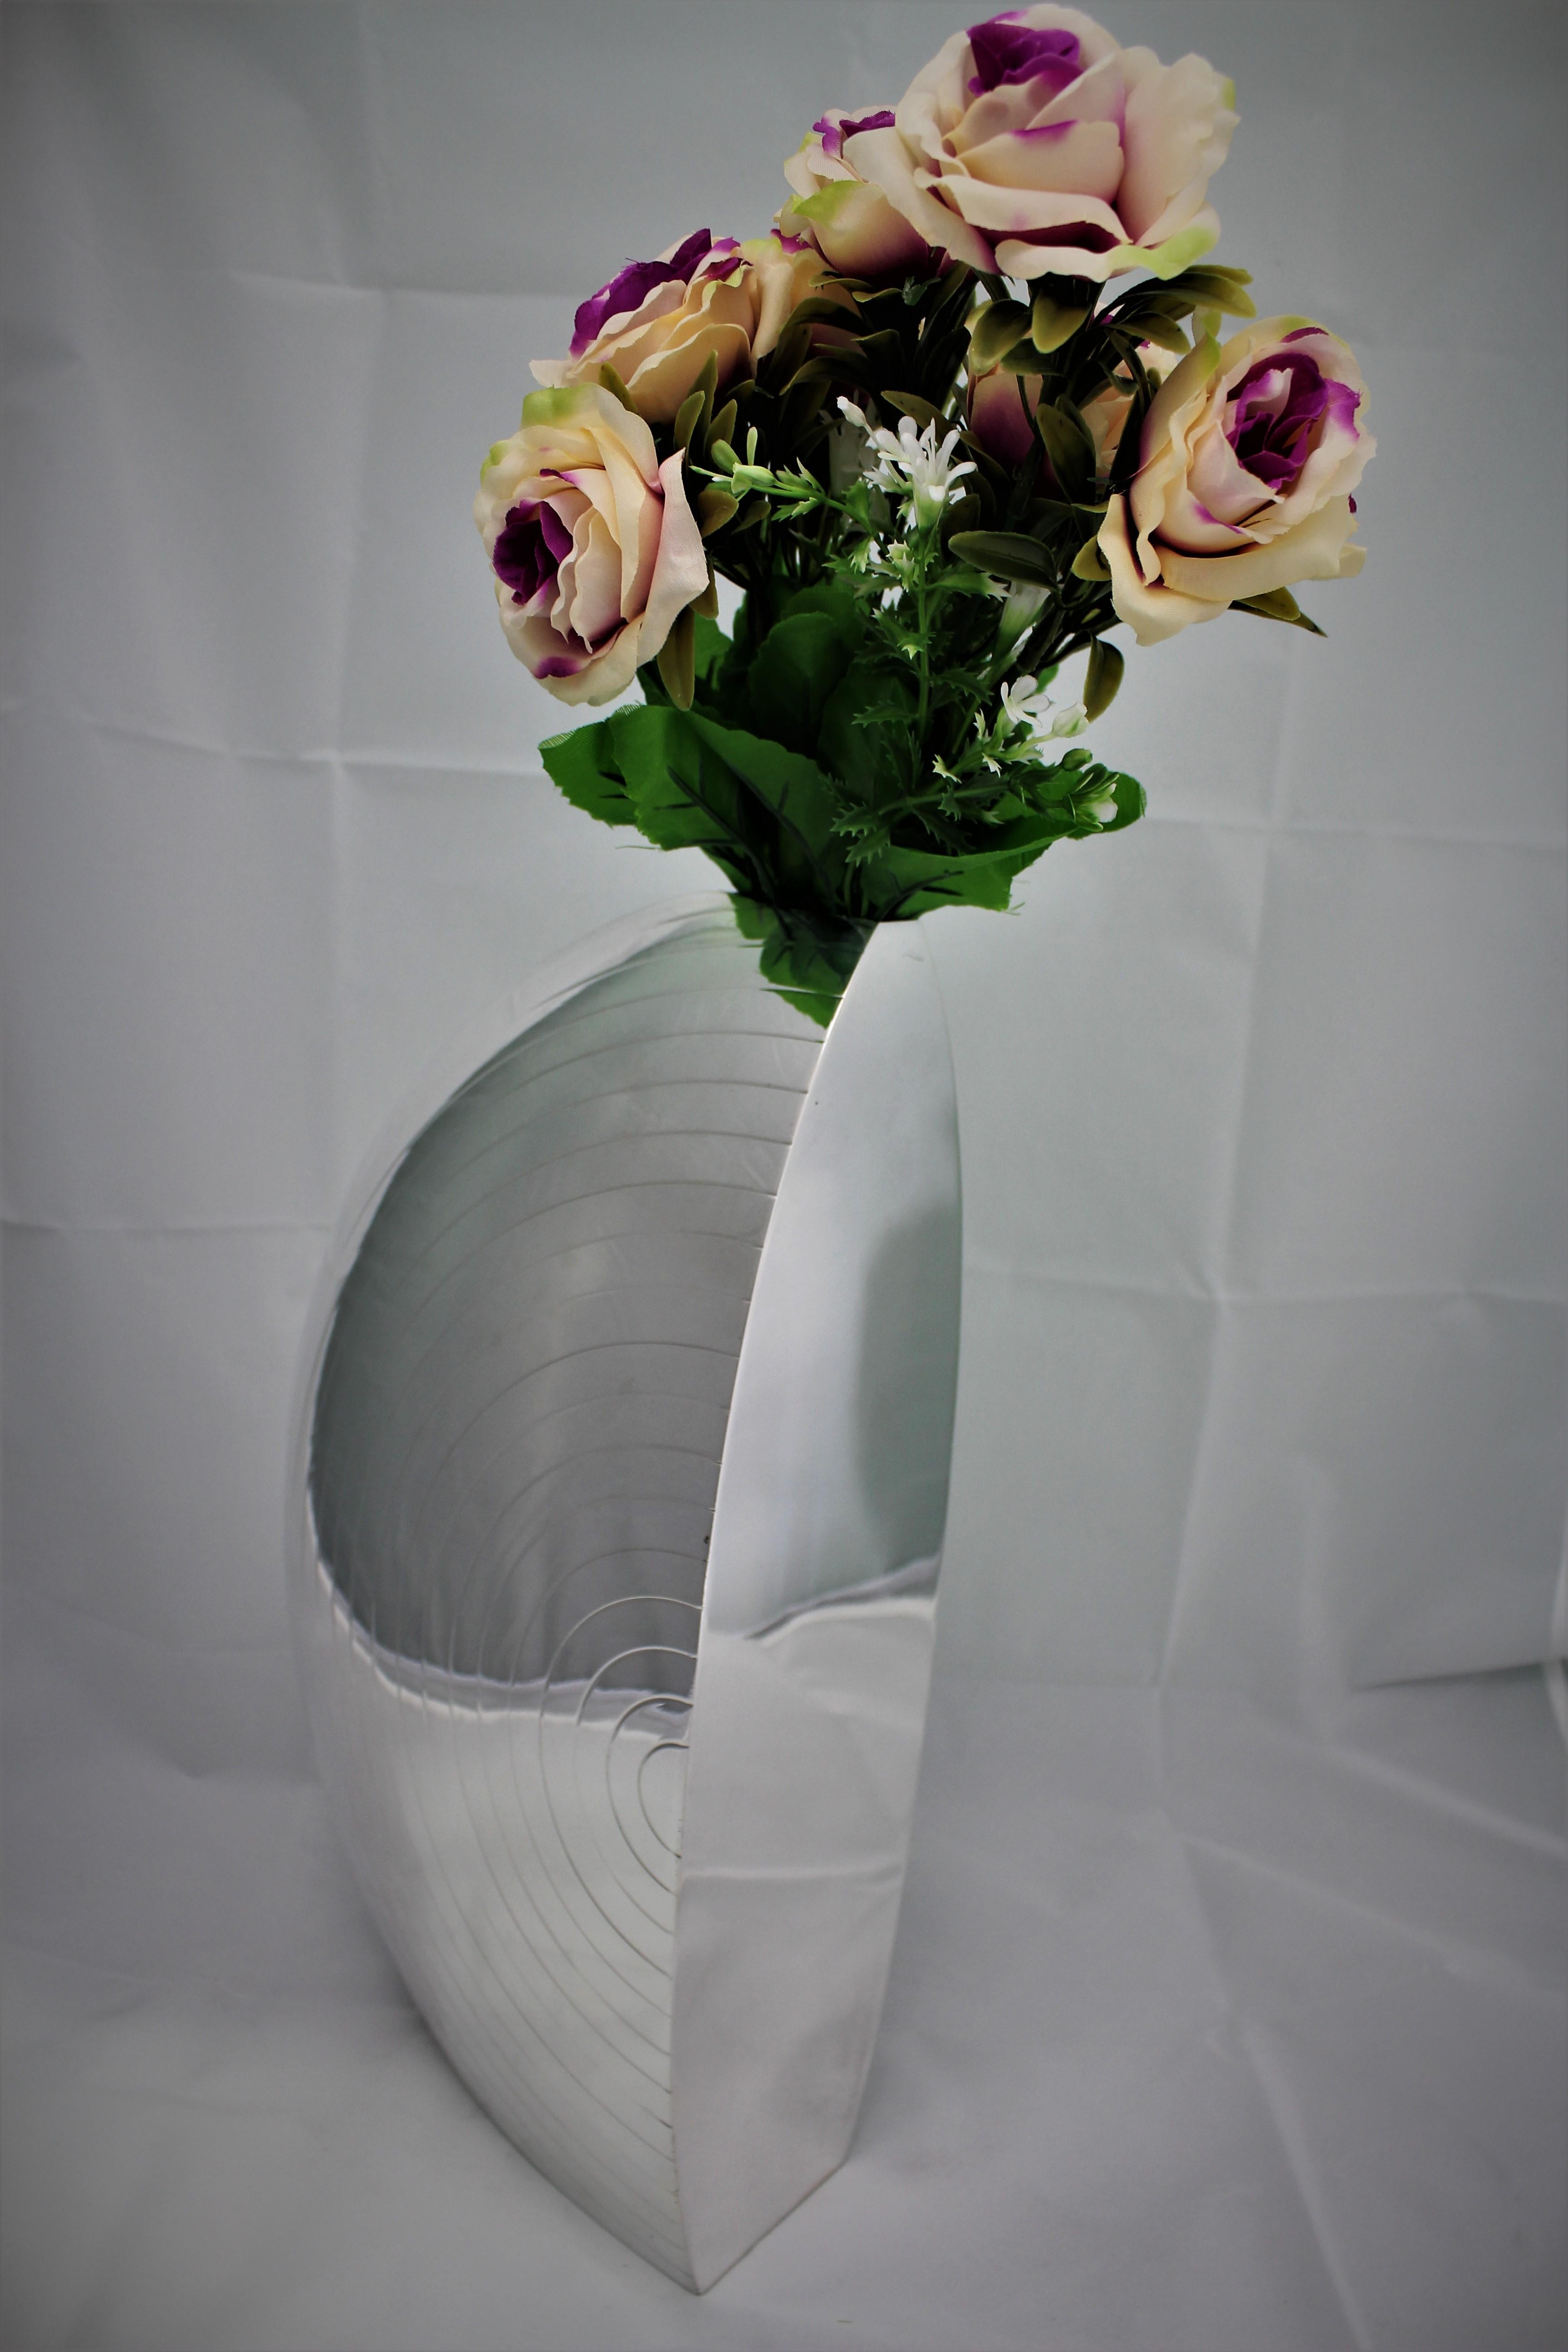 20th Century Futurist Silver Sail Flower Vase by Luigi Diani Milan Italy, 1920s For Sale 2